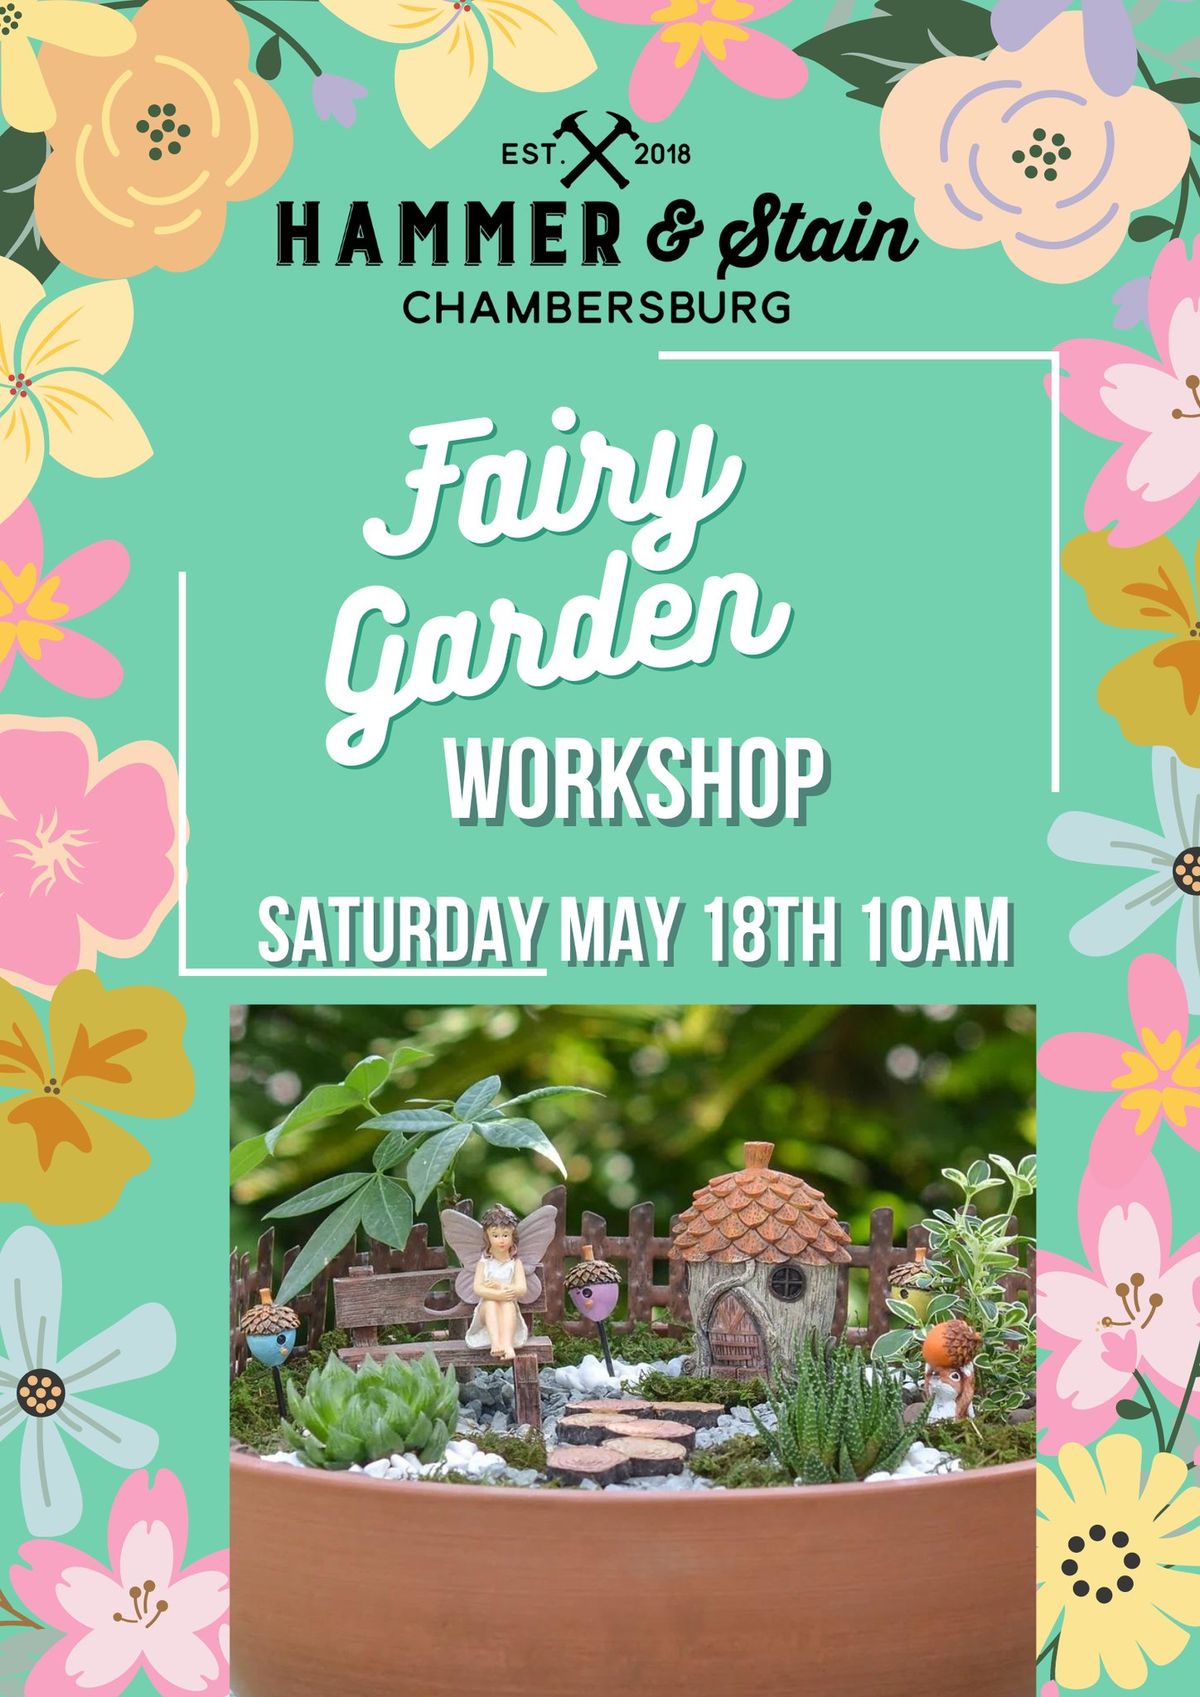 Saturday May 18th- Fairy Garden Workshop 10am